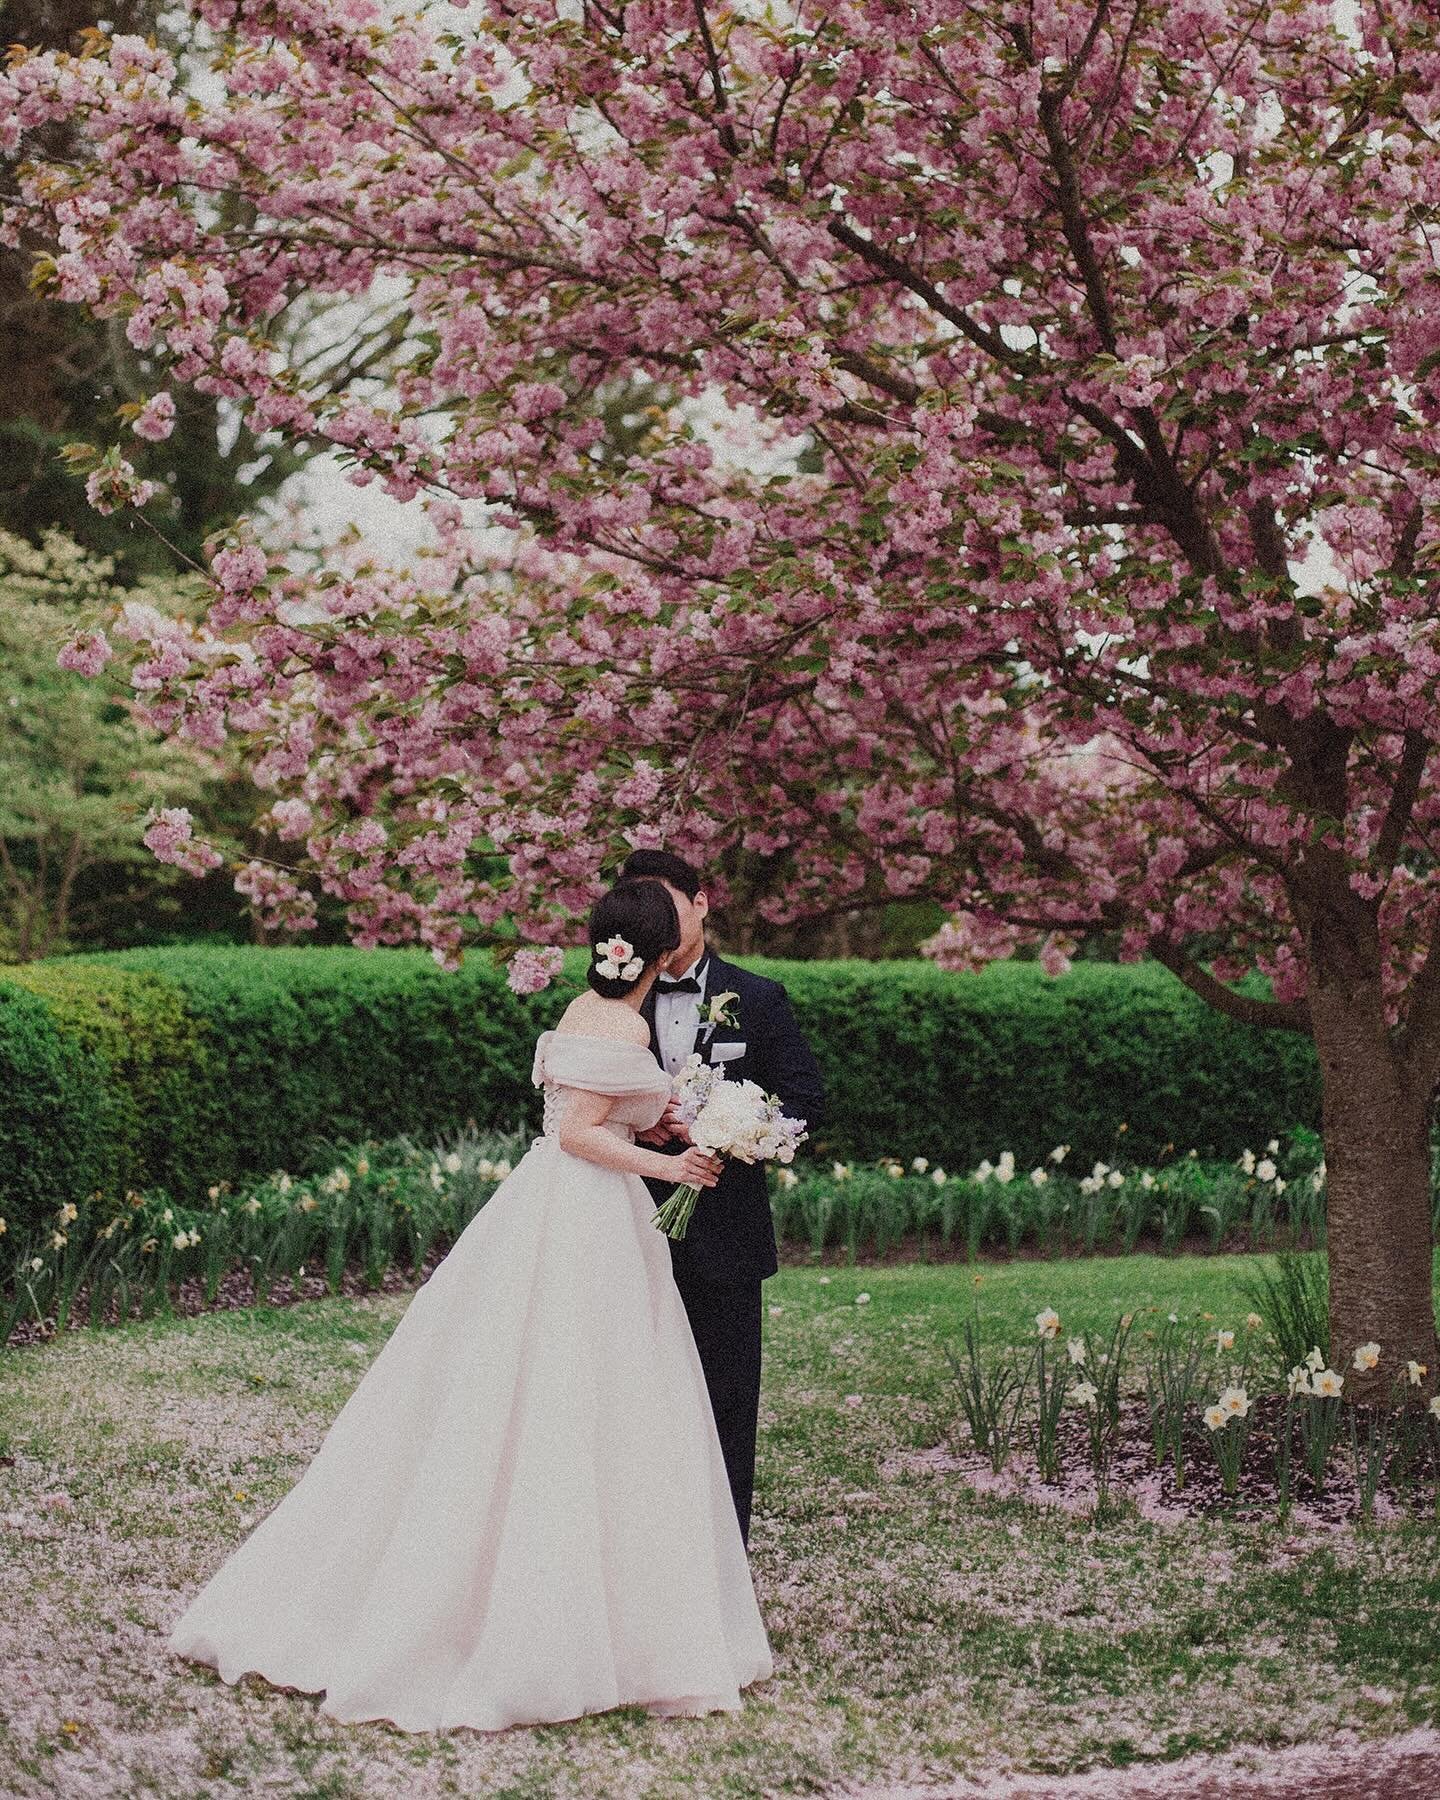 siheon &amp; girim wedding x fernbrook farm nj
#fernbrookfarm #springwedding #farmwedding #cottagewedding #koreanwedding #filmwedding